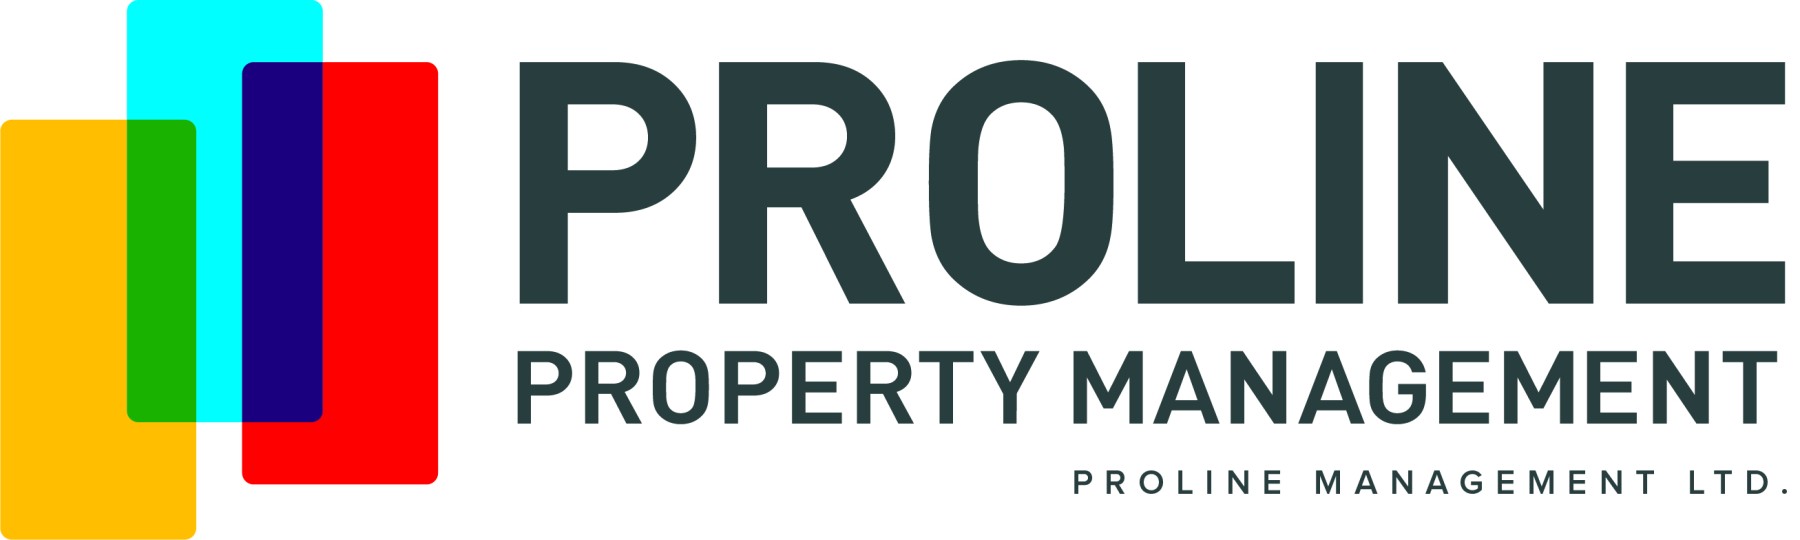 Proline Property Management